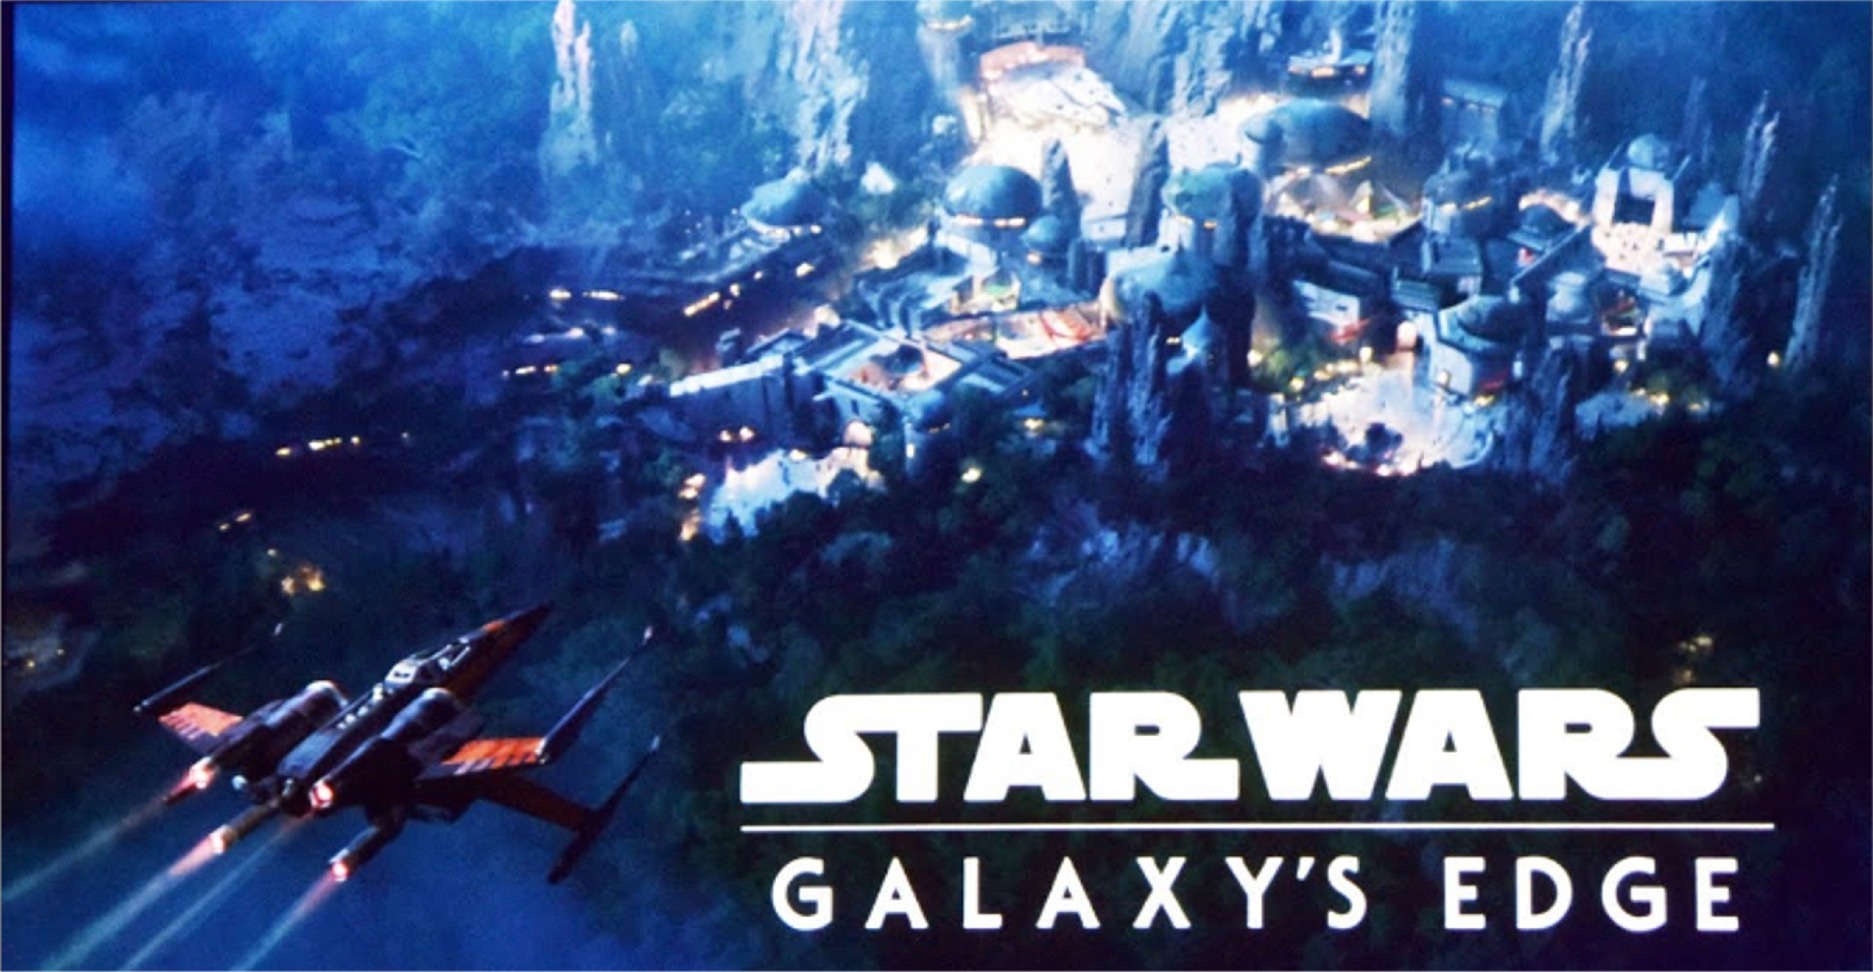 Star Wars Galaxys Edge Poster